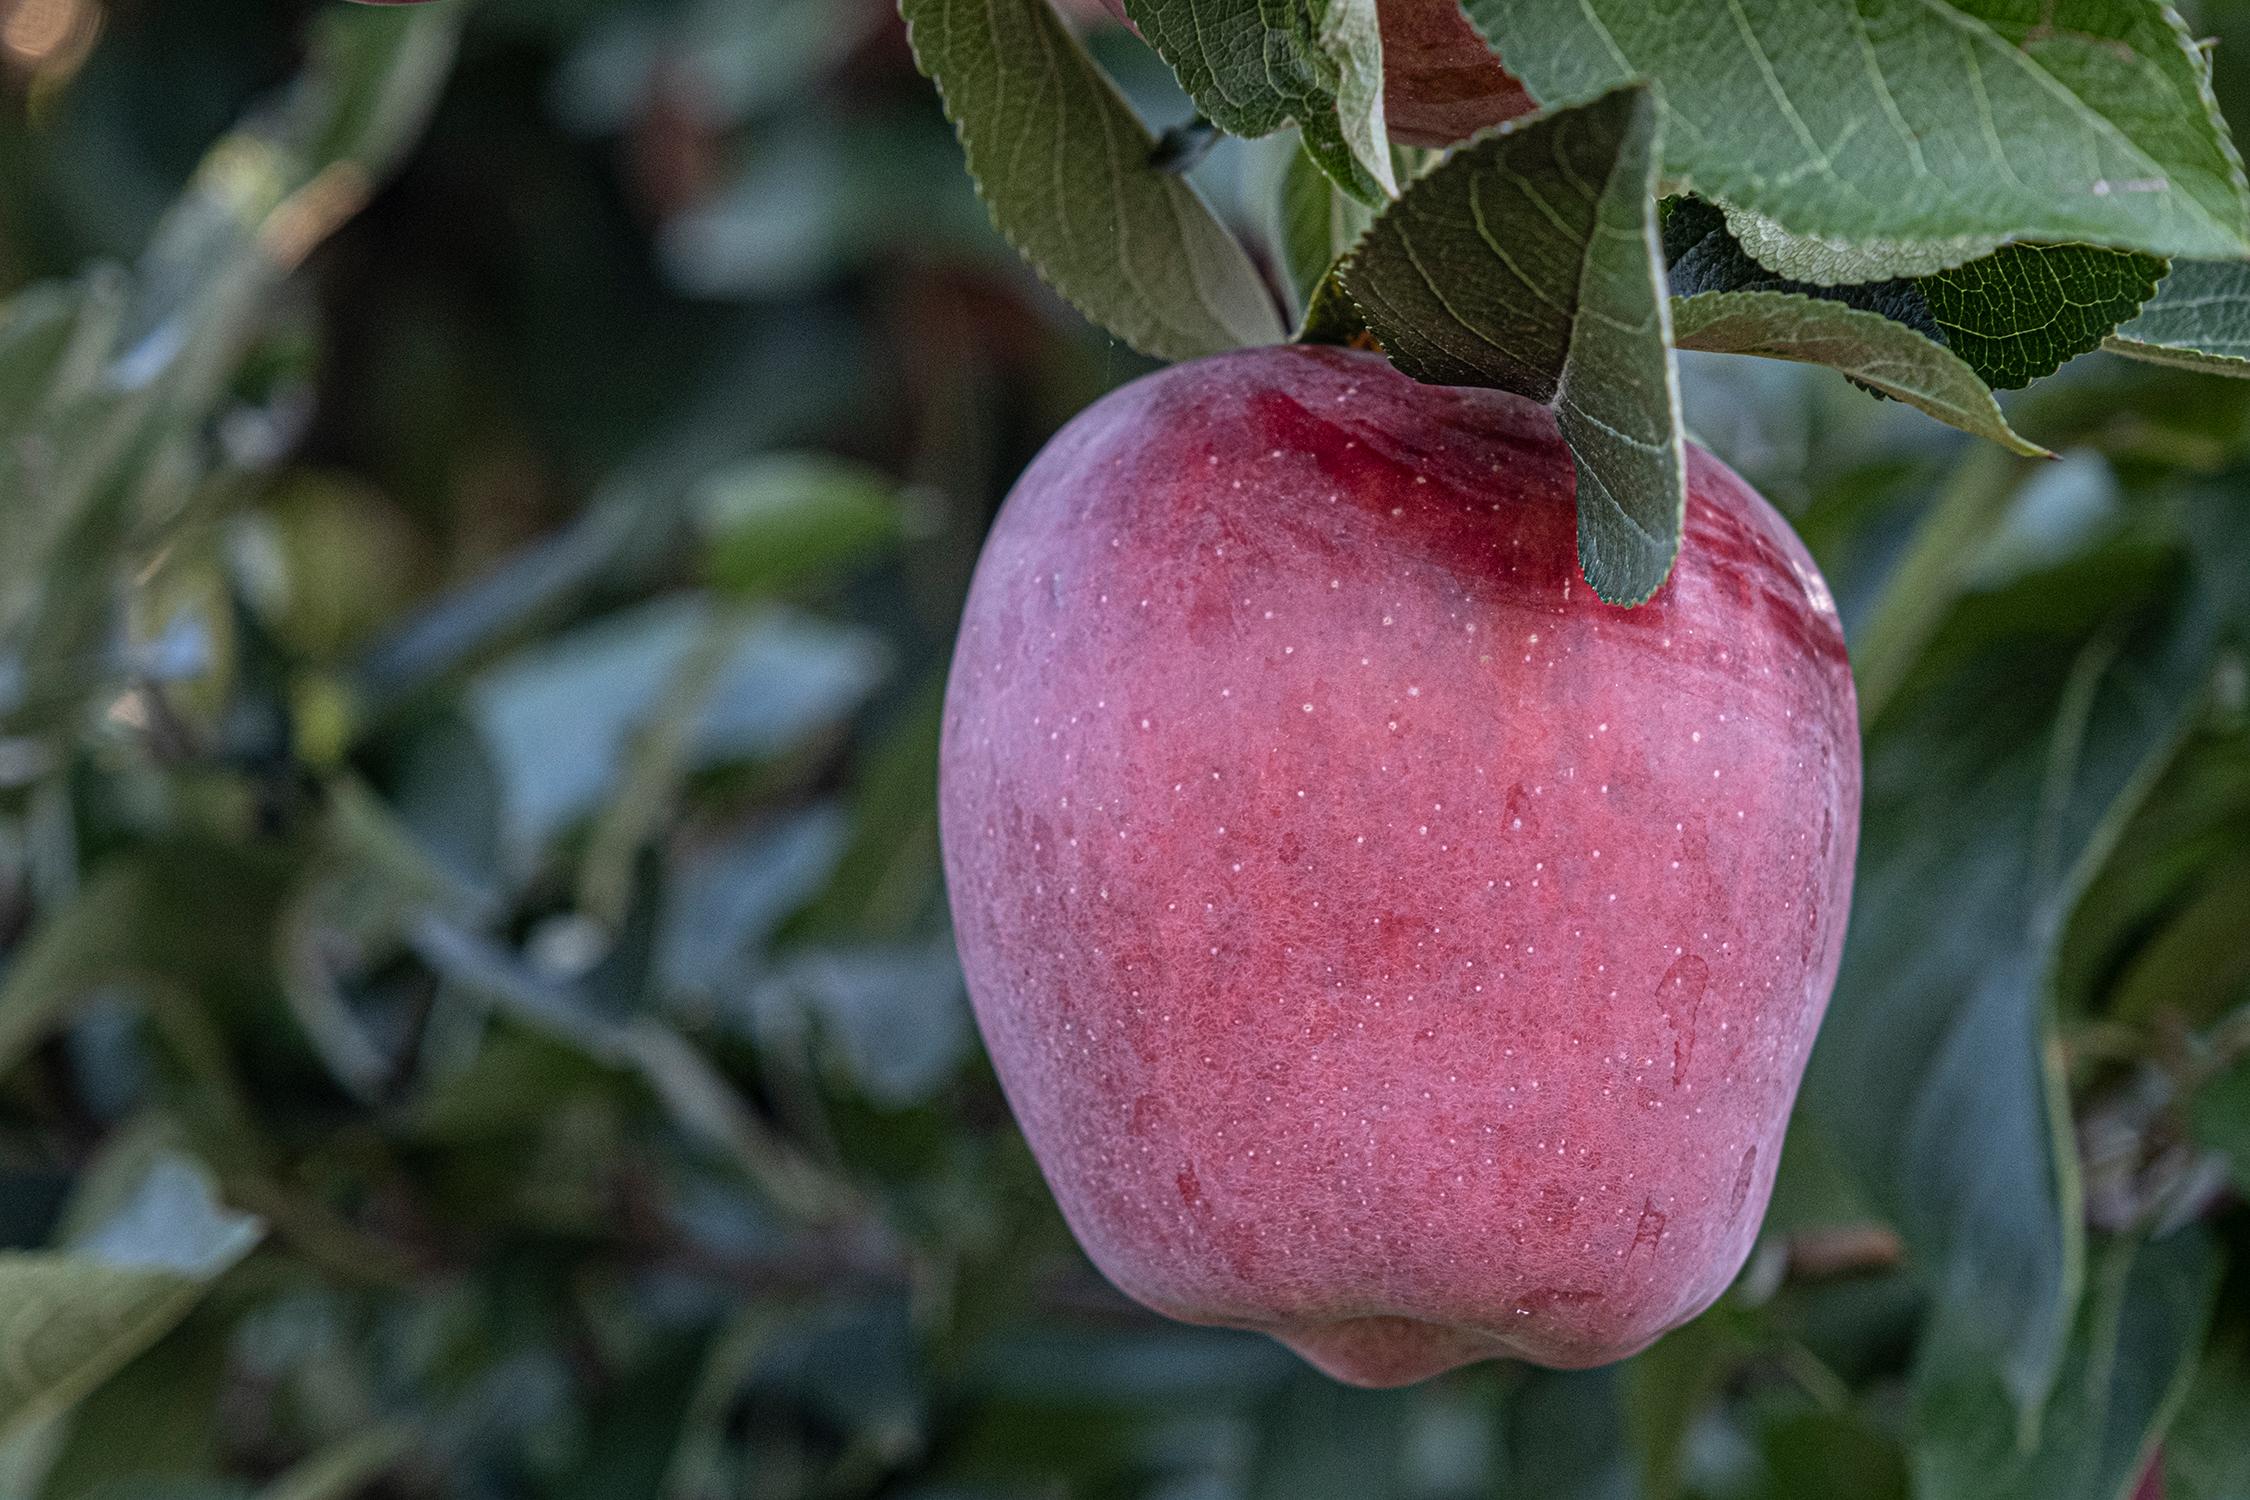 G.M.M. Illuminati Frutta | Vendita Frutta all'ingrosso in Toscana